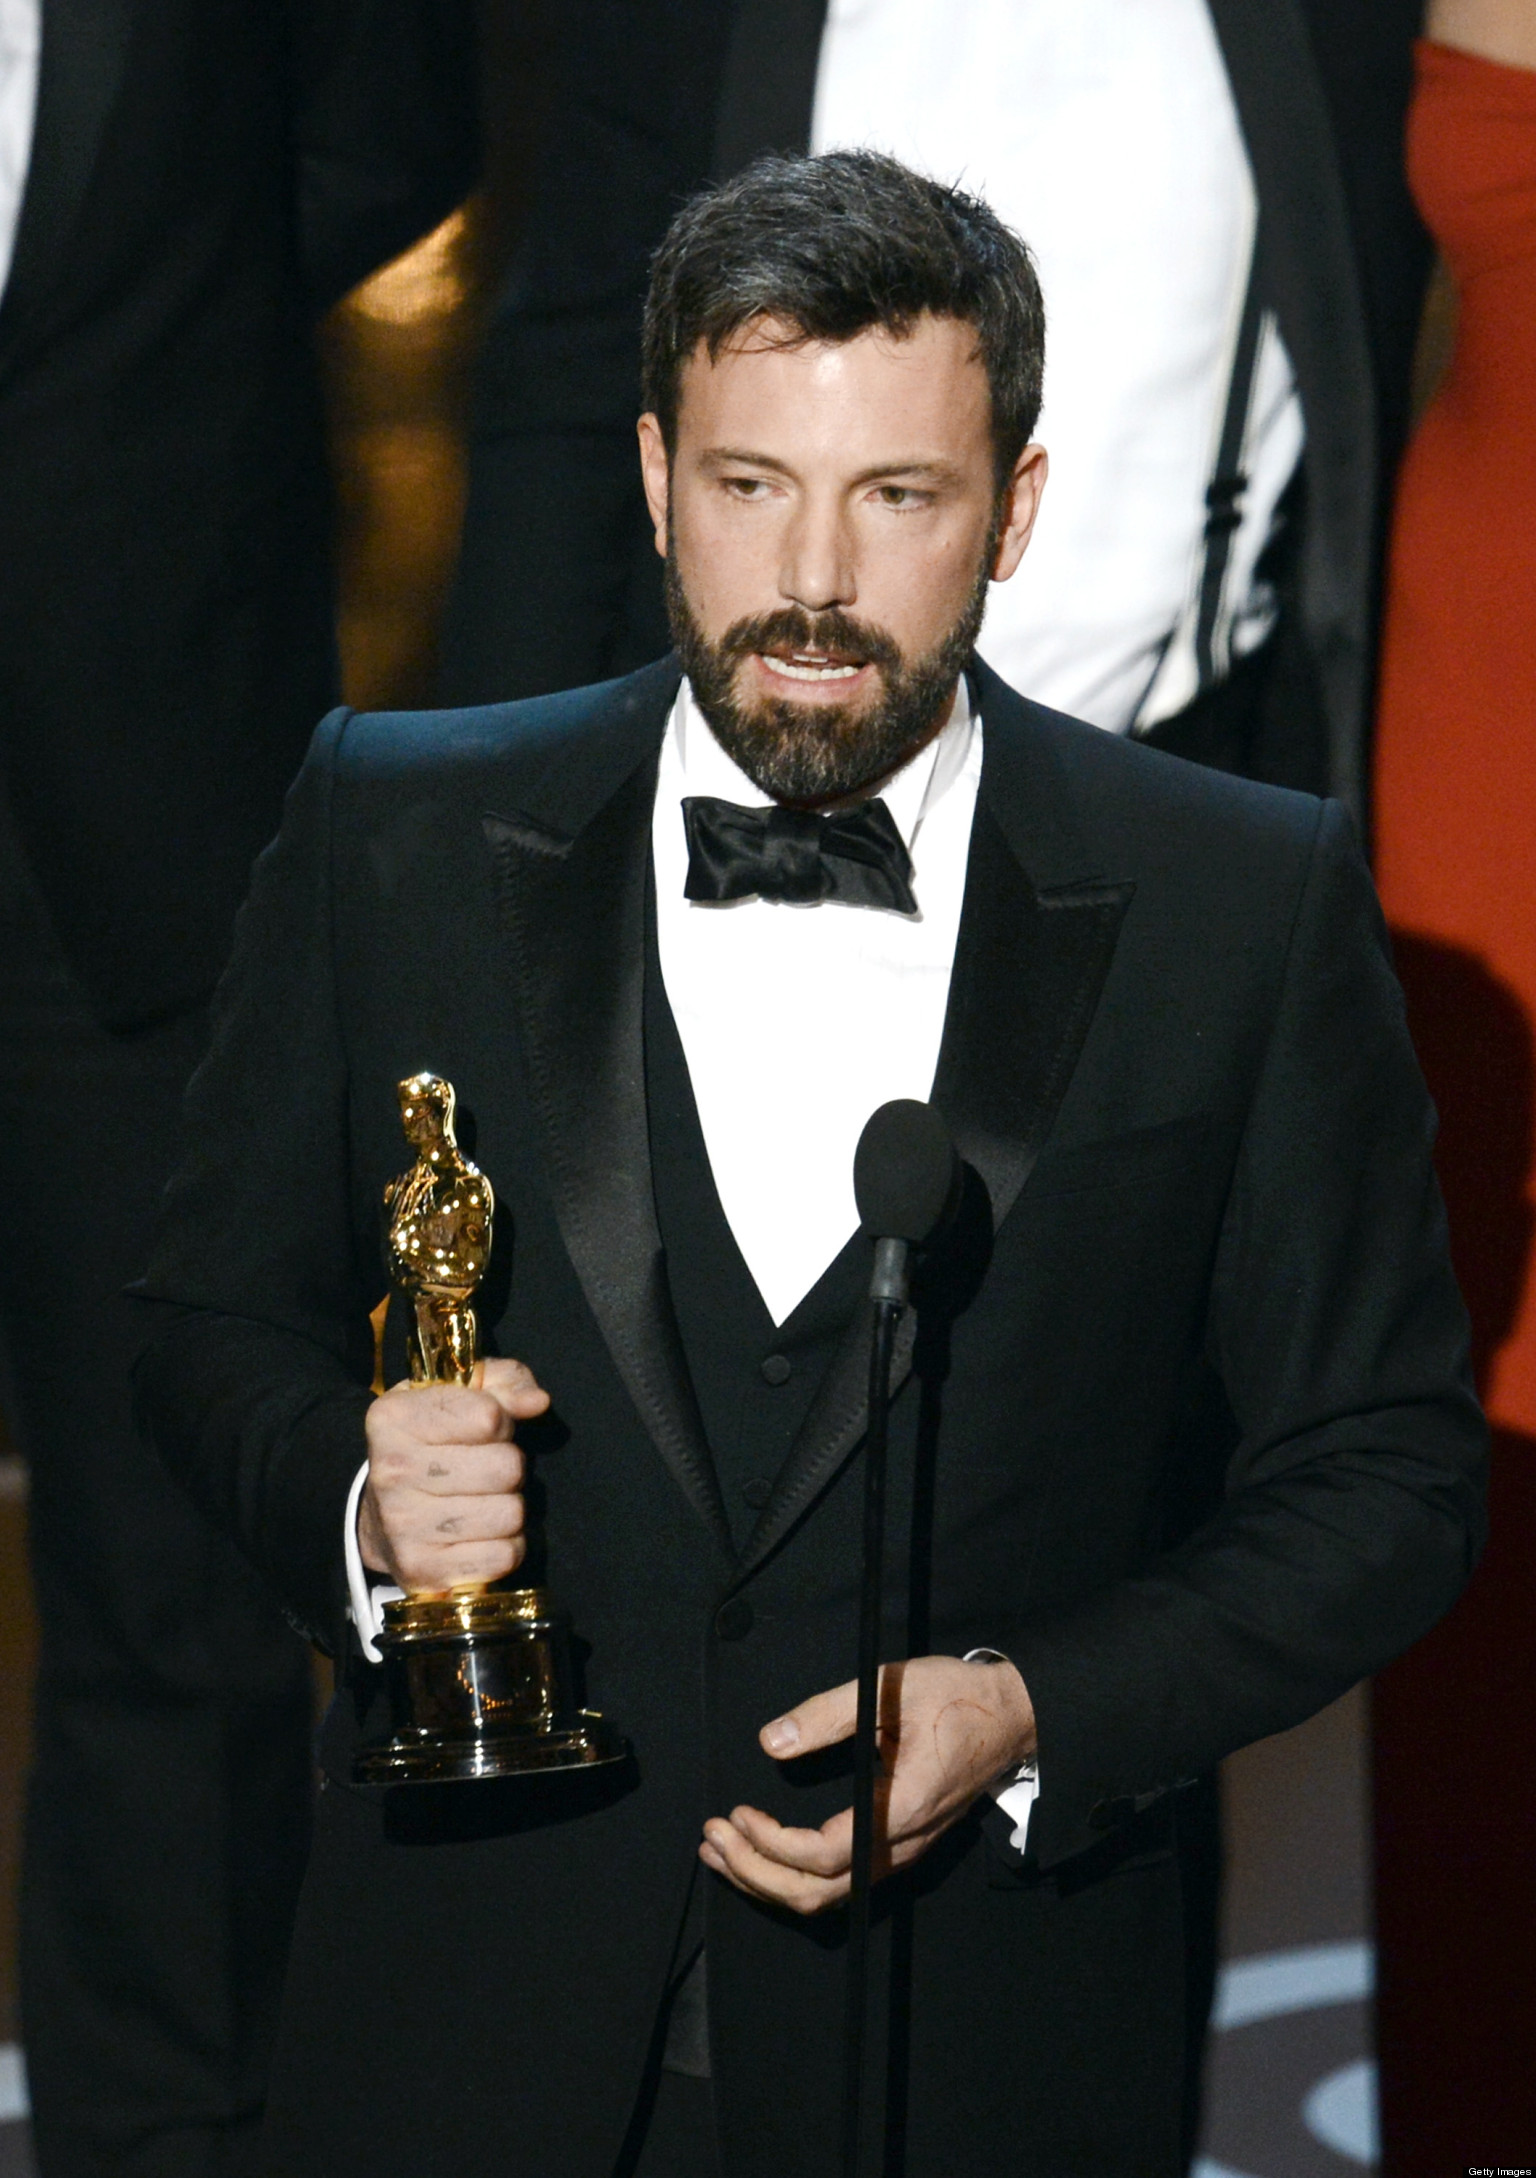 Best Picture Oscars Winner 'Argo' Wins at 2013 Academy Awards